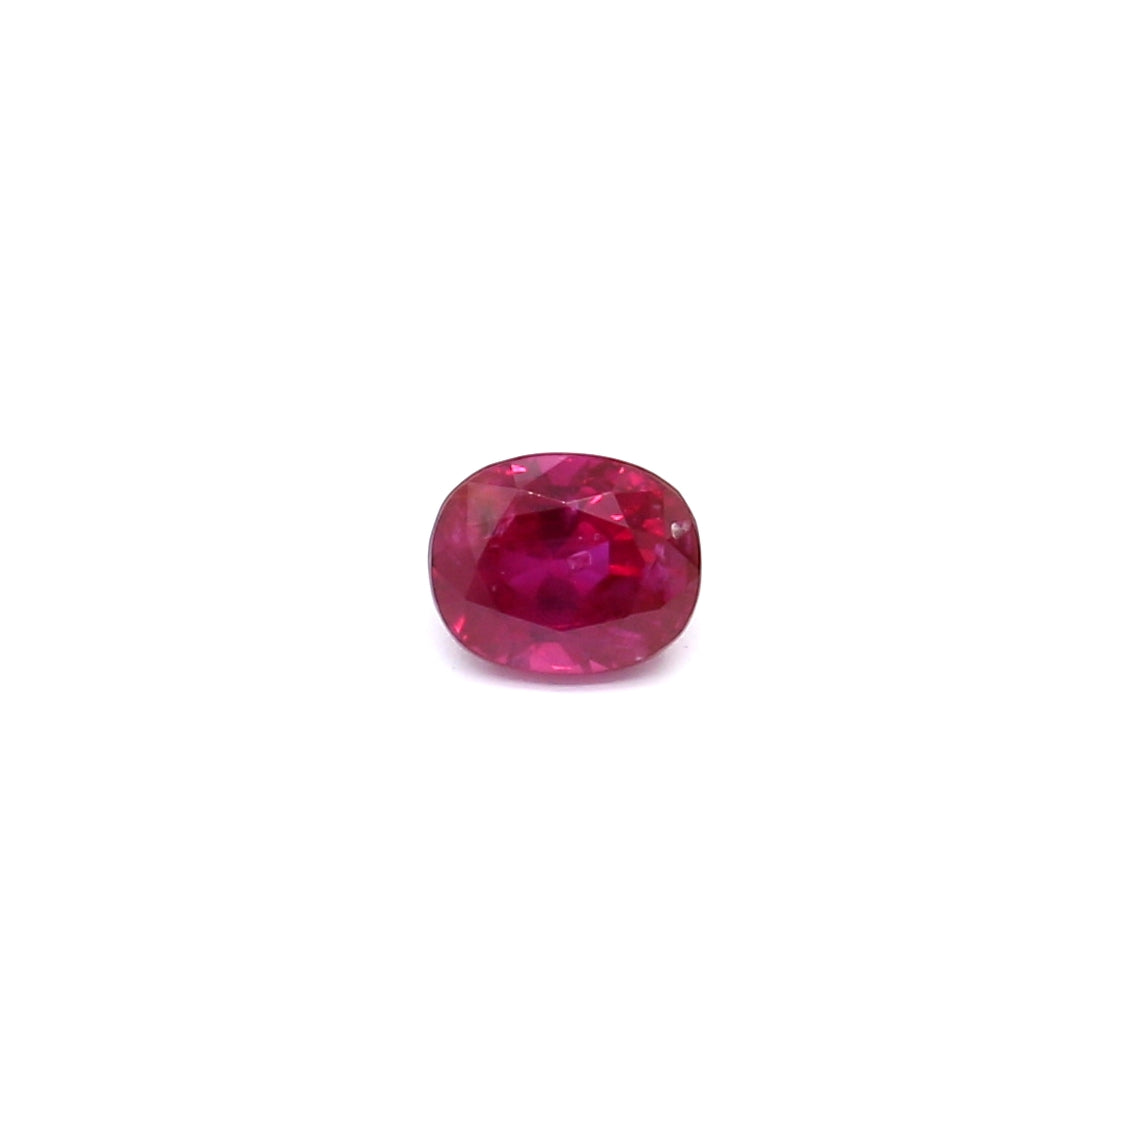 0.54ct Purplish Red, Oval Ruby, No Heat, Myanmar - 4.80 x 3.93 x 3.25mm